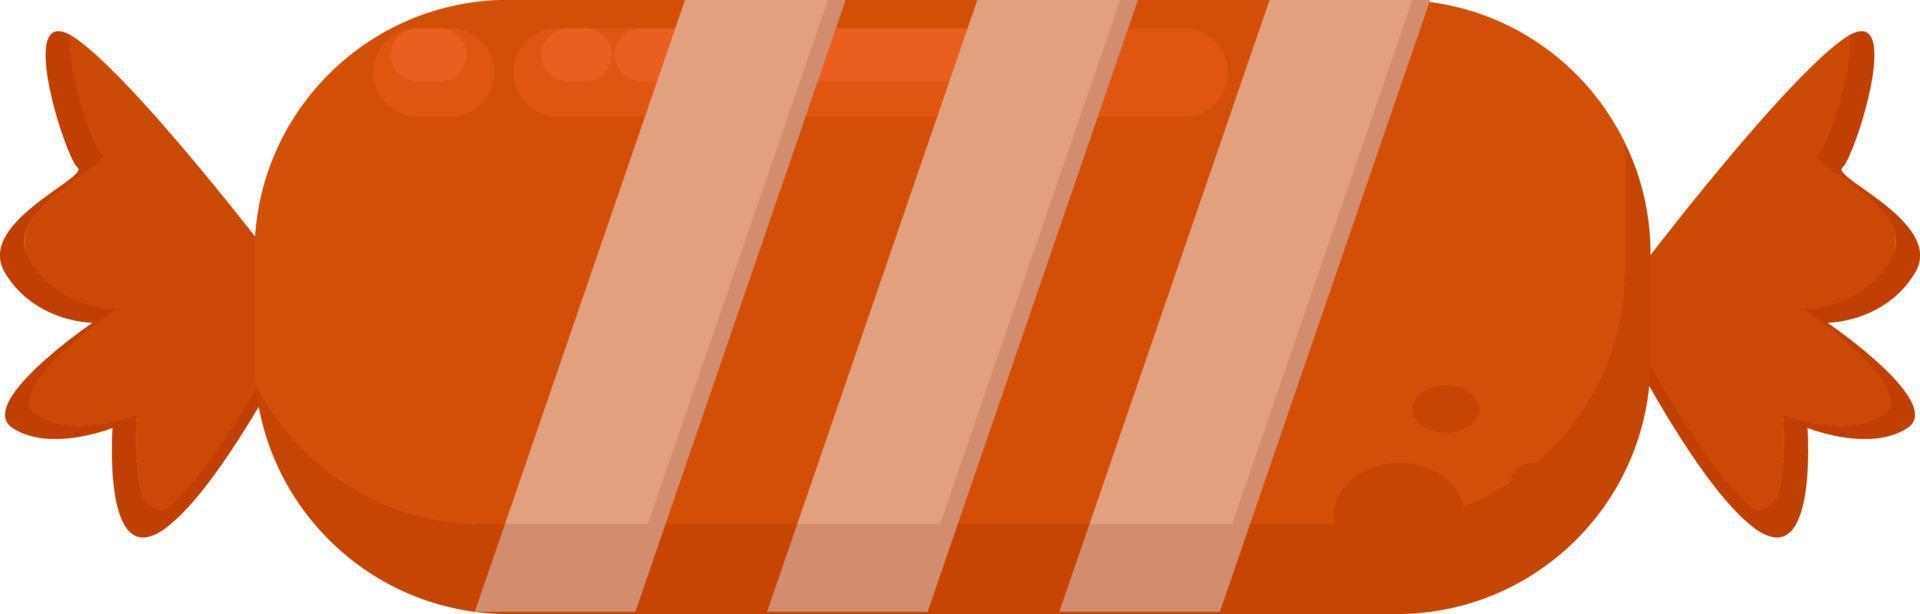 Caramelo de naranja, ilustración, vector sobre fondo blanco.